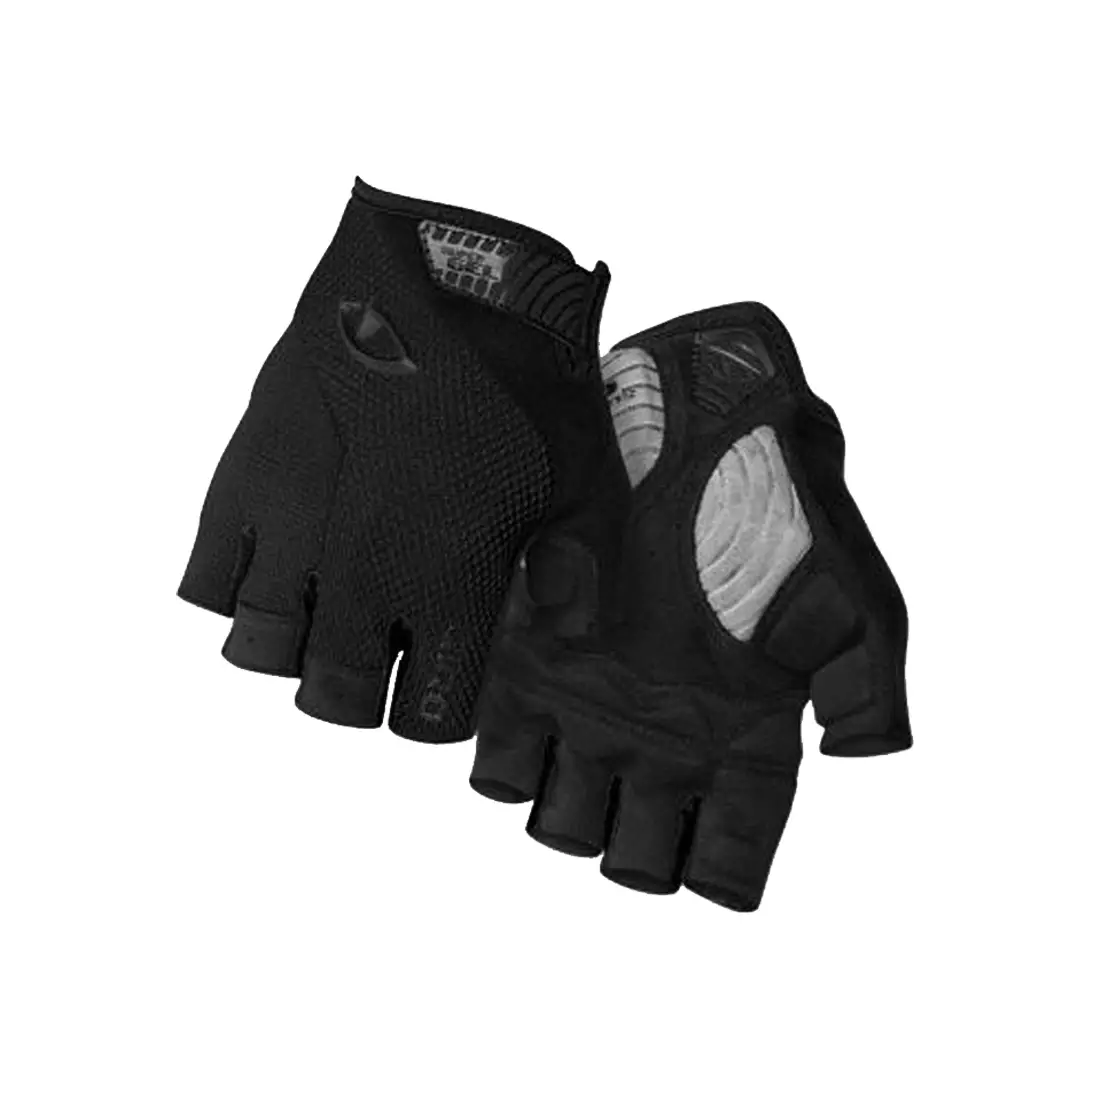 GIRO STRADE DURE cycling gloves, black